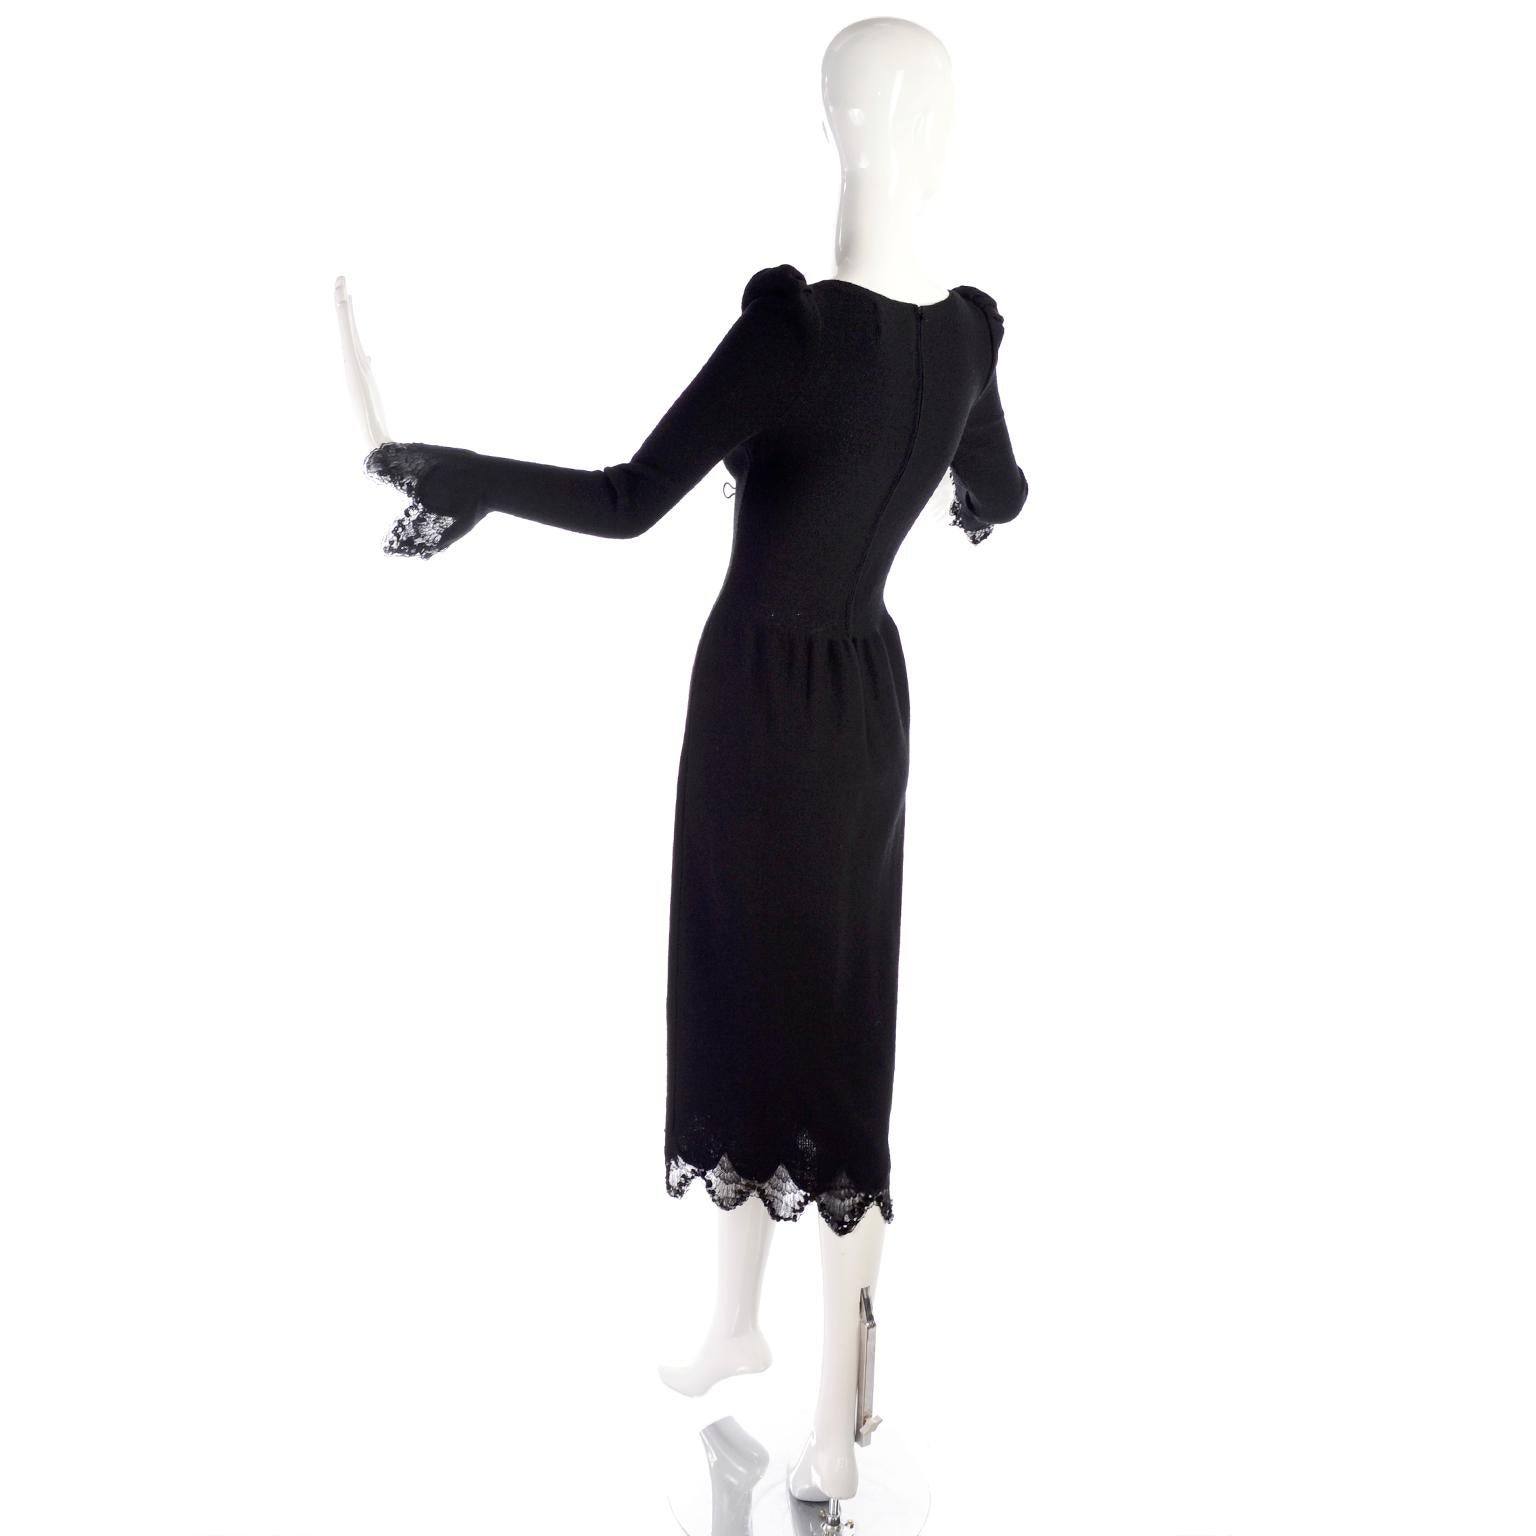 1970s Victorian Revival Adolfo Vintage Black Dress With Lace & Sequin Trim For Sale 2